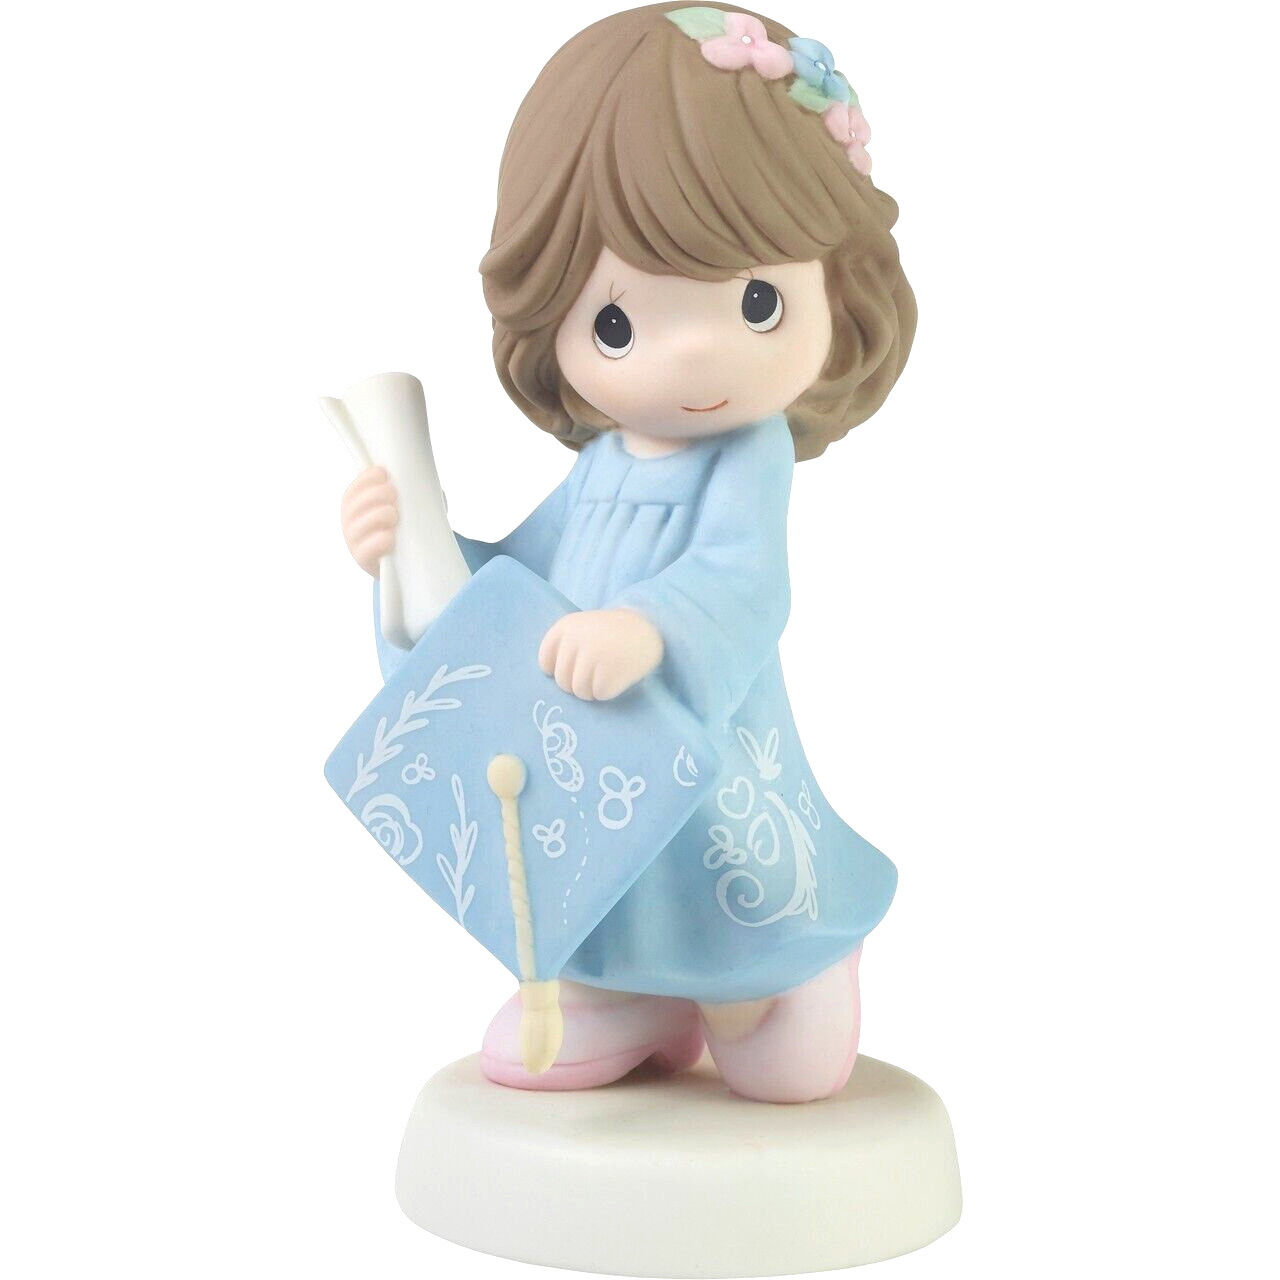 ✿ New PRECIOUS MOMENTS Porcelain Figurine FUTURE BELONGS TO YOU Graduation Girl